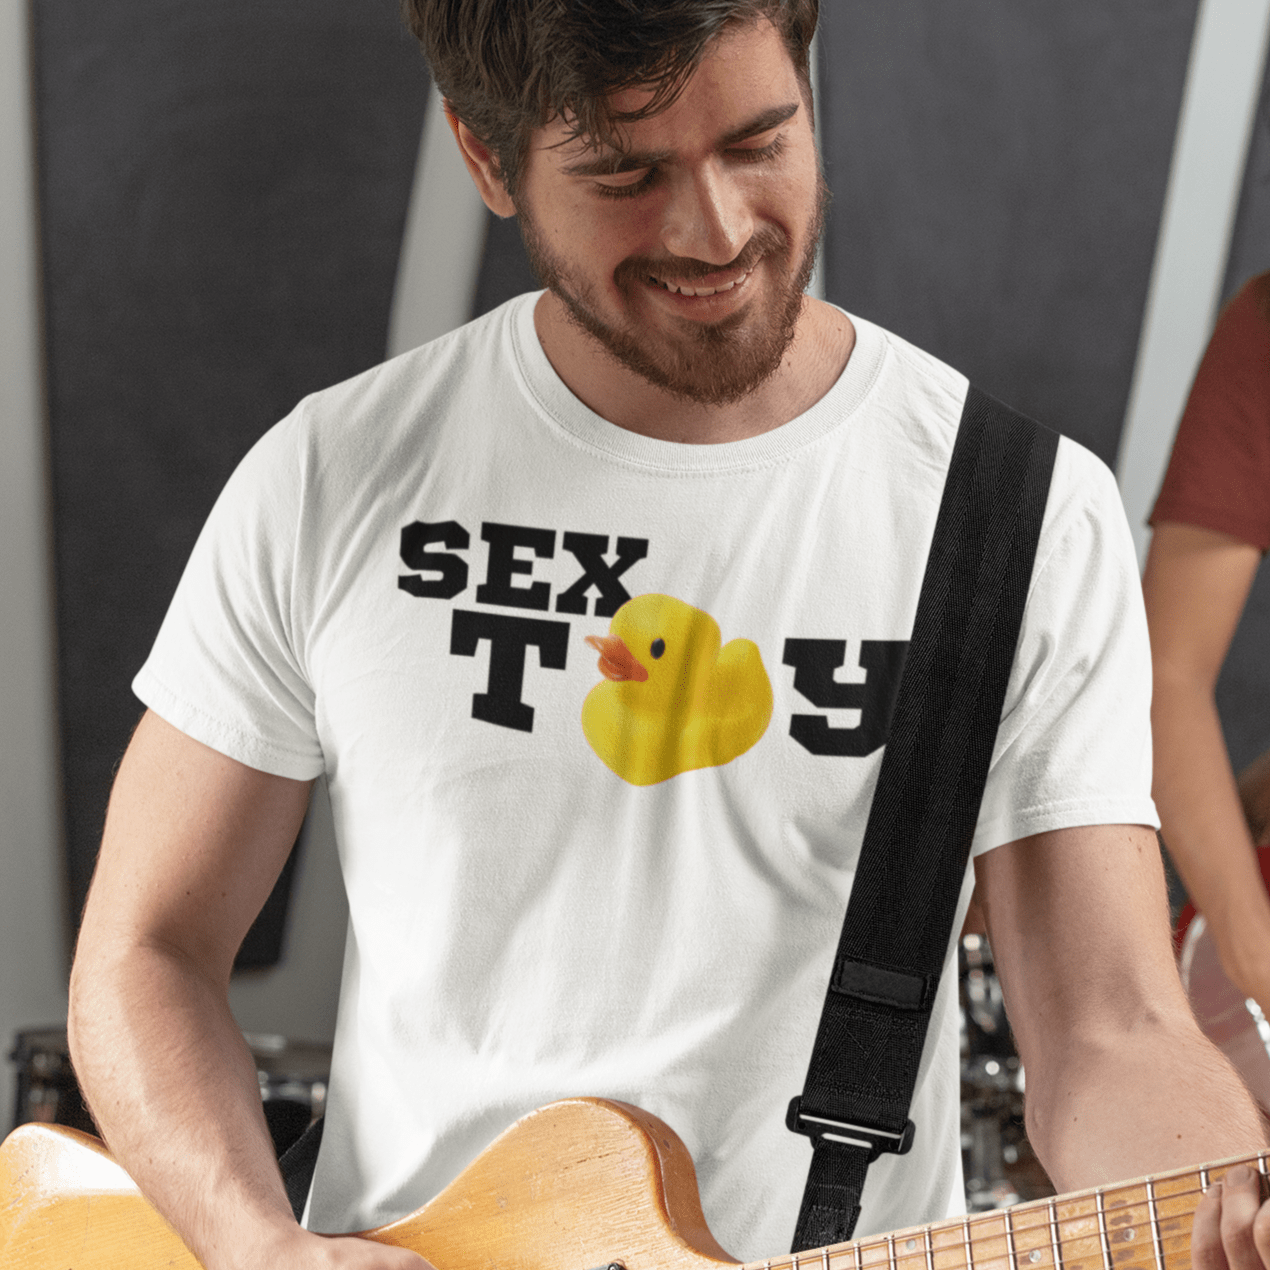 
                  
                    Apparel Sex Toy T-shirt INVI-Expressionwear
                  
                